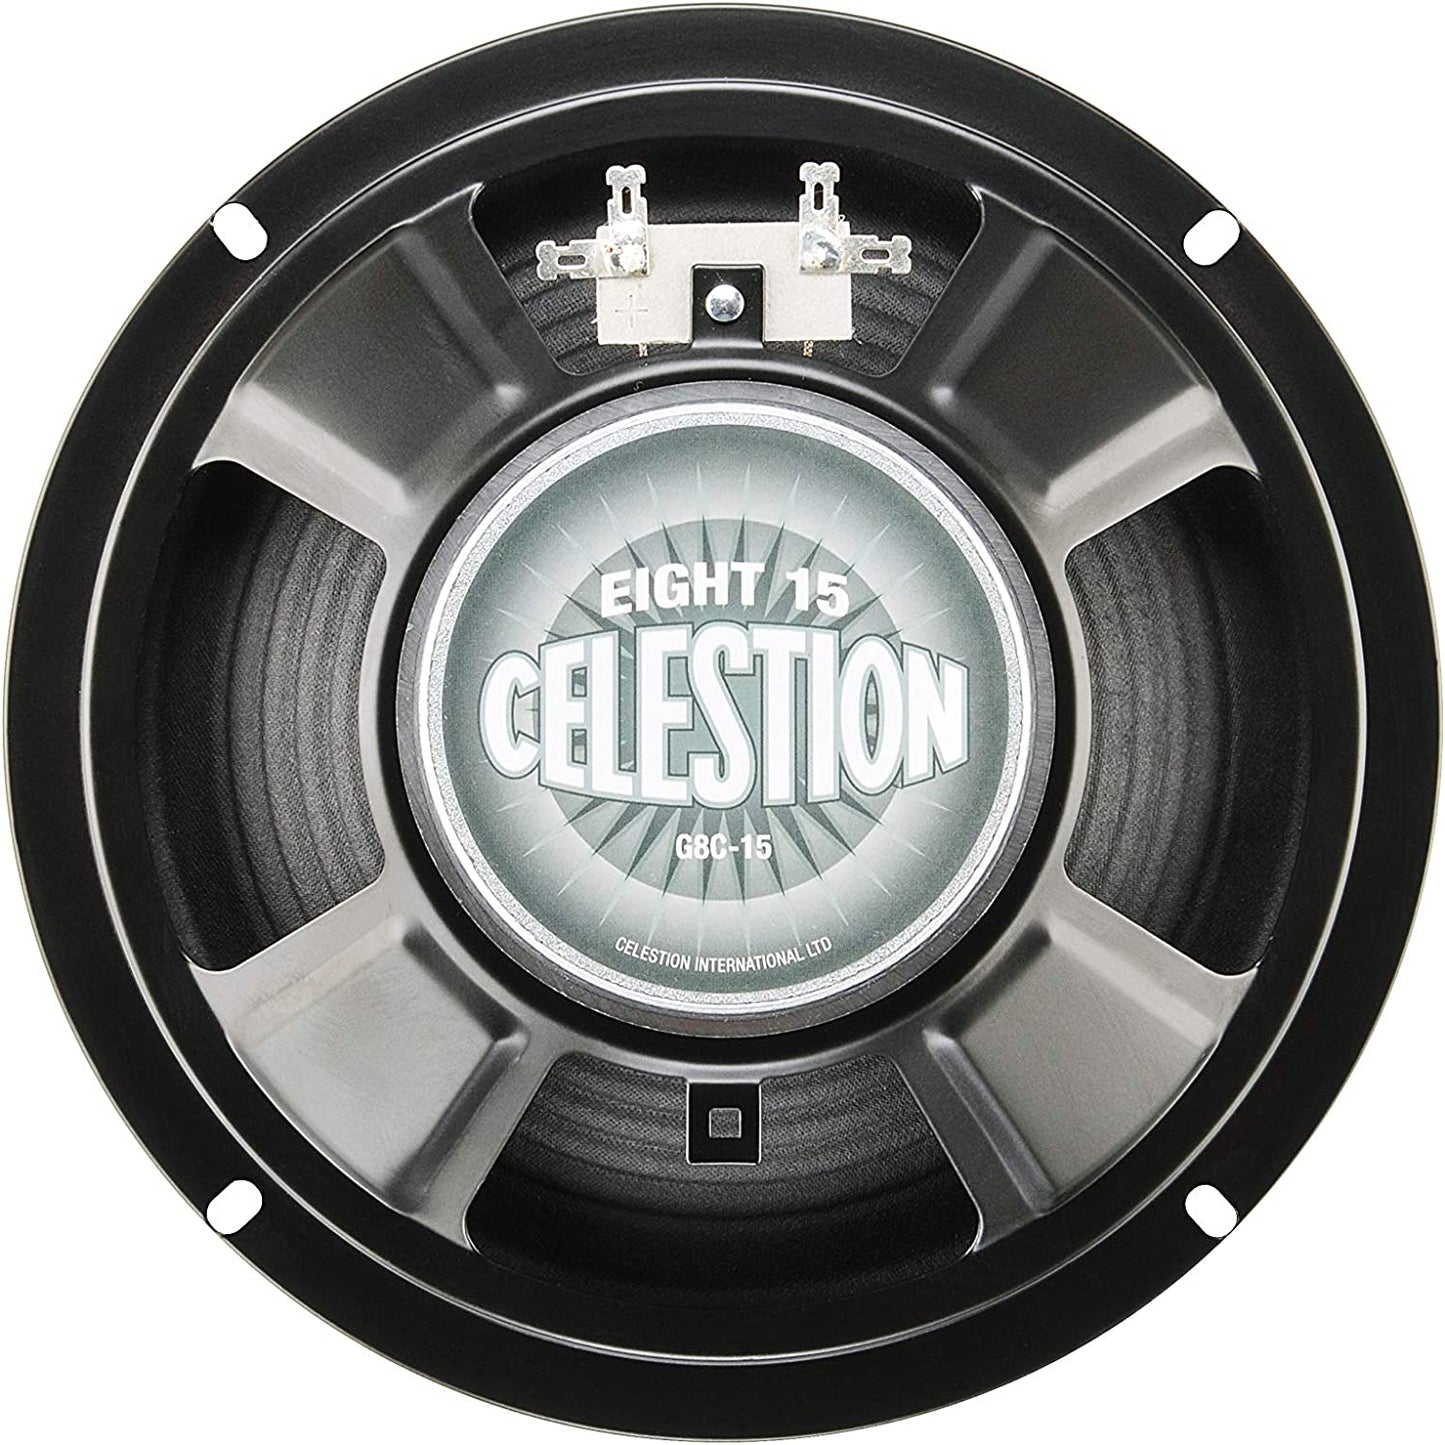 Celestion Eight 15 - 8” 4 Ohm Guitar Speaker